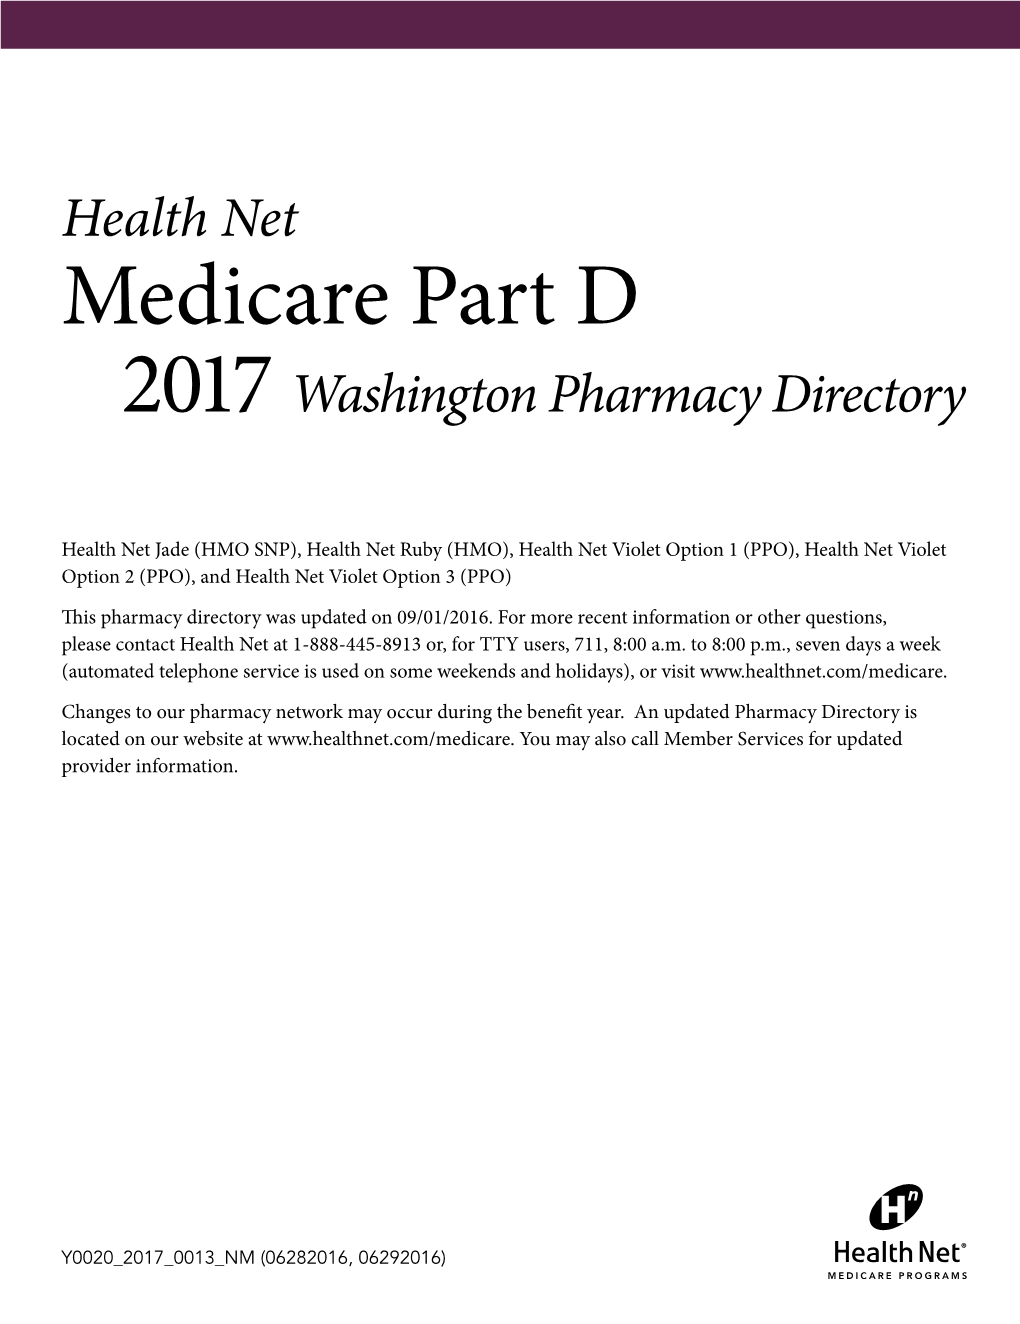 Medicare Part D 2017 Washington Pharmacy Directory